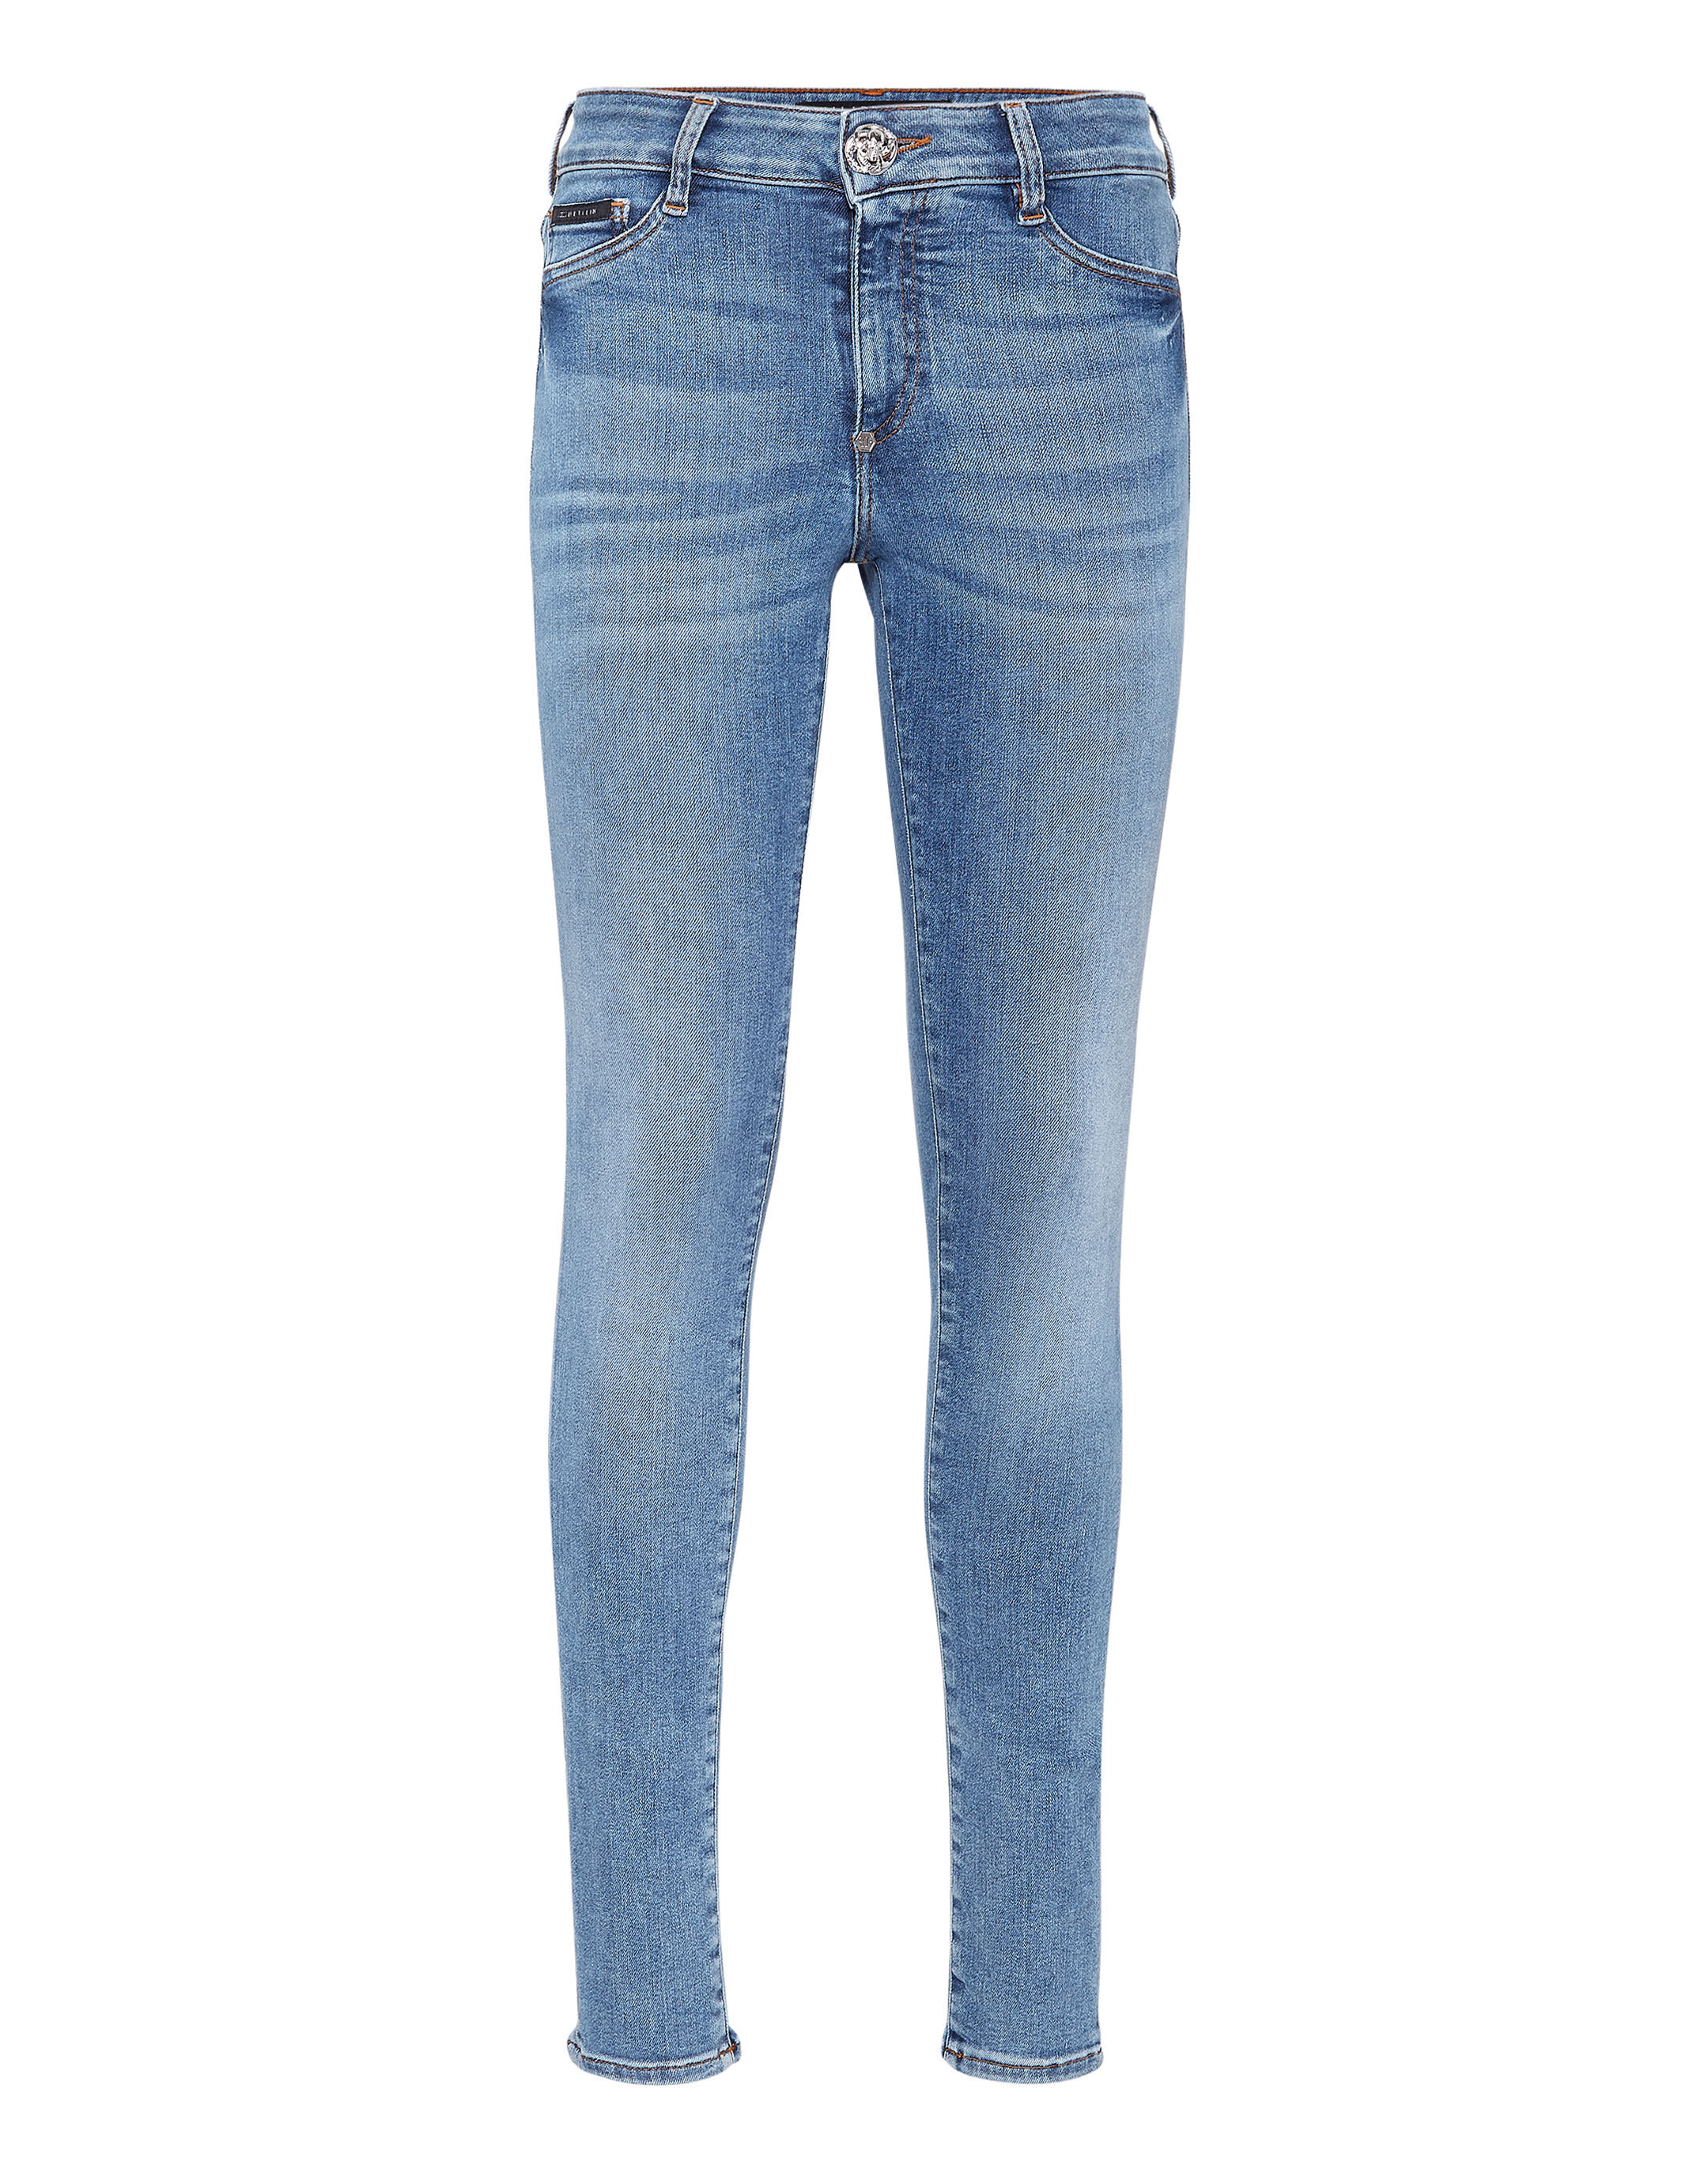 Philipp Plein Denim Jeanshose in Blau Damen Bekleidung Jeans Röhrenjeans 